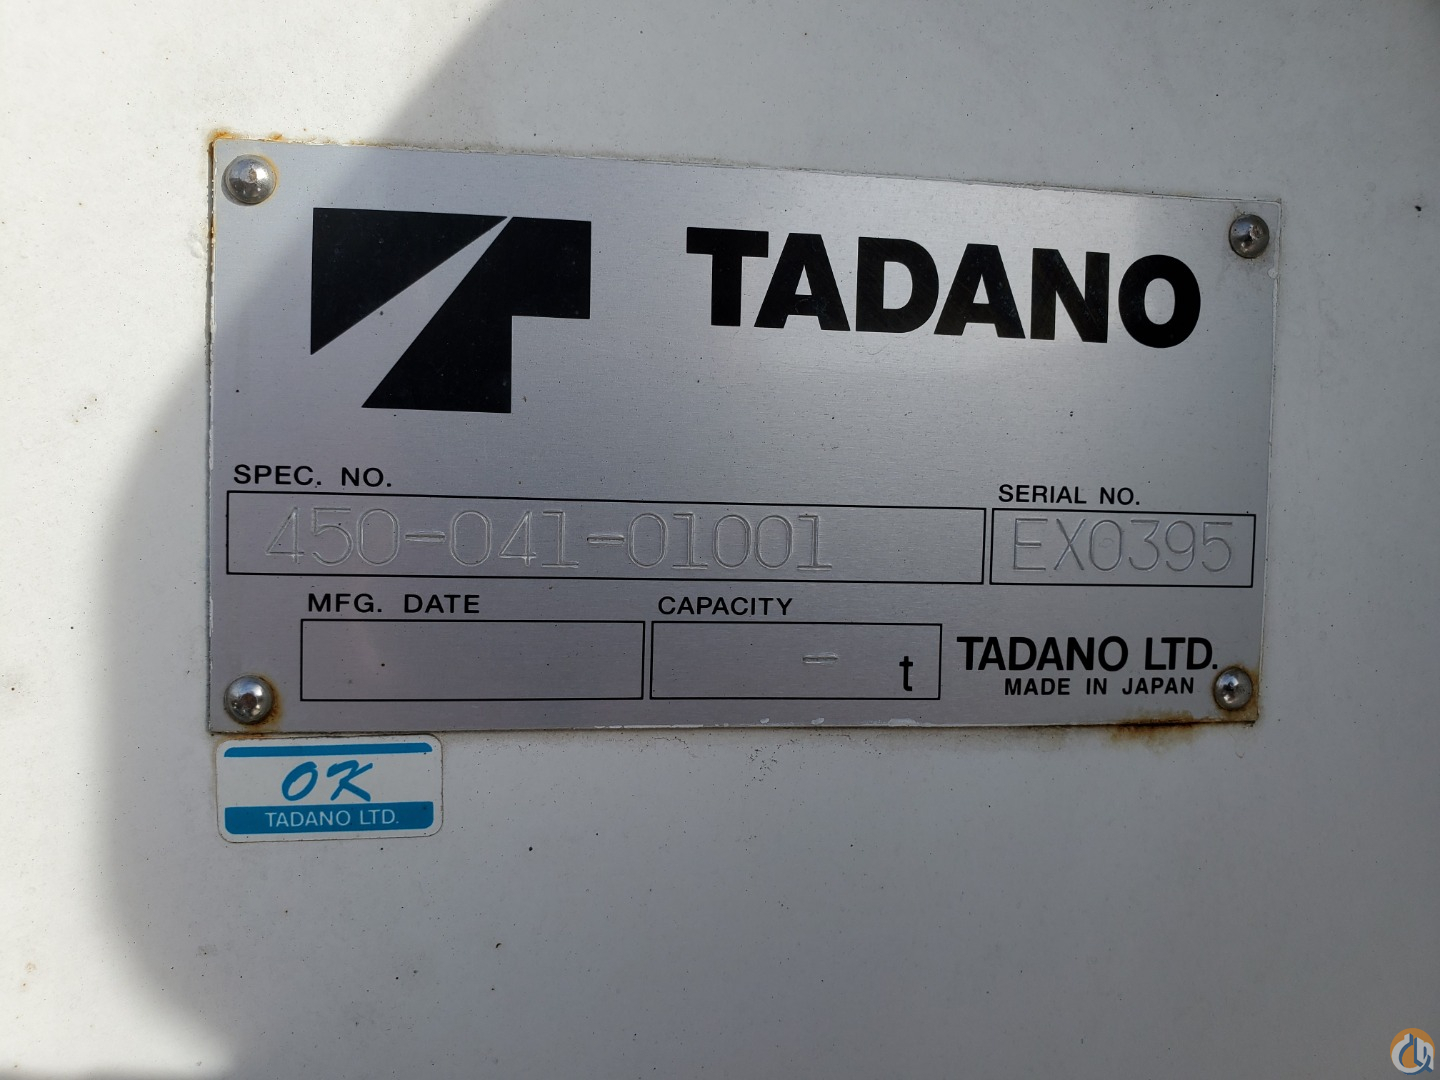 Tadano TM-1882